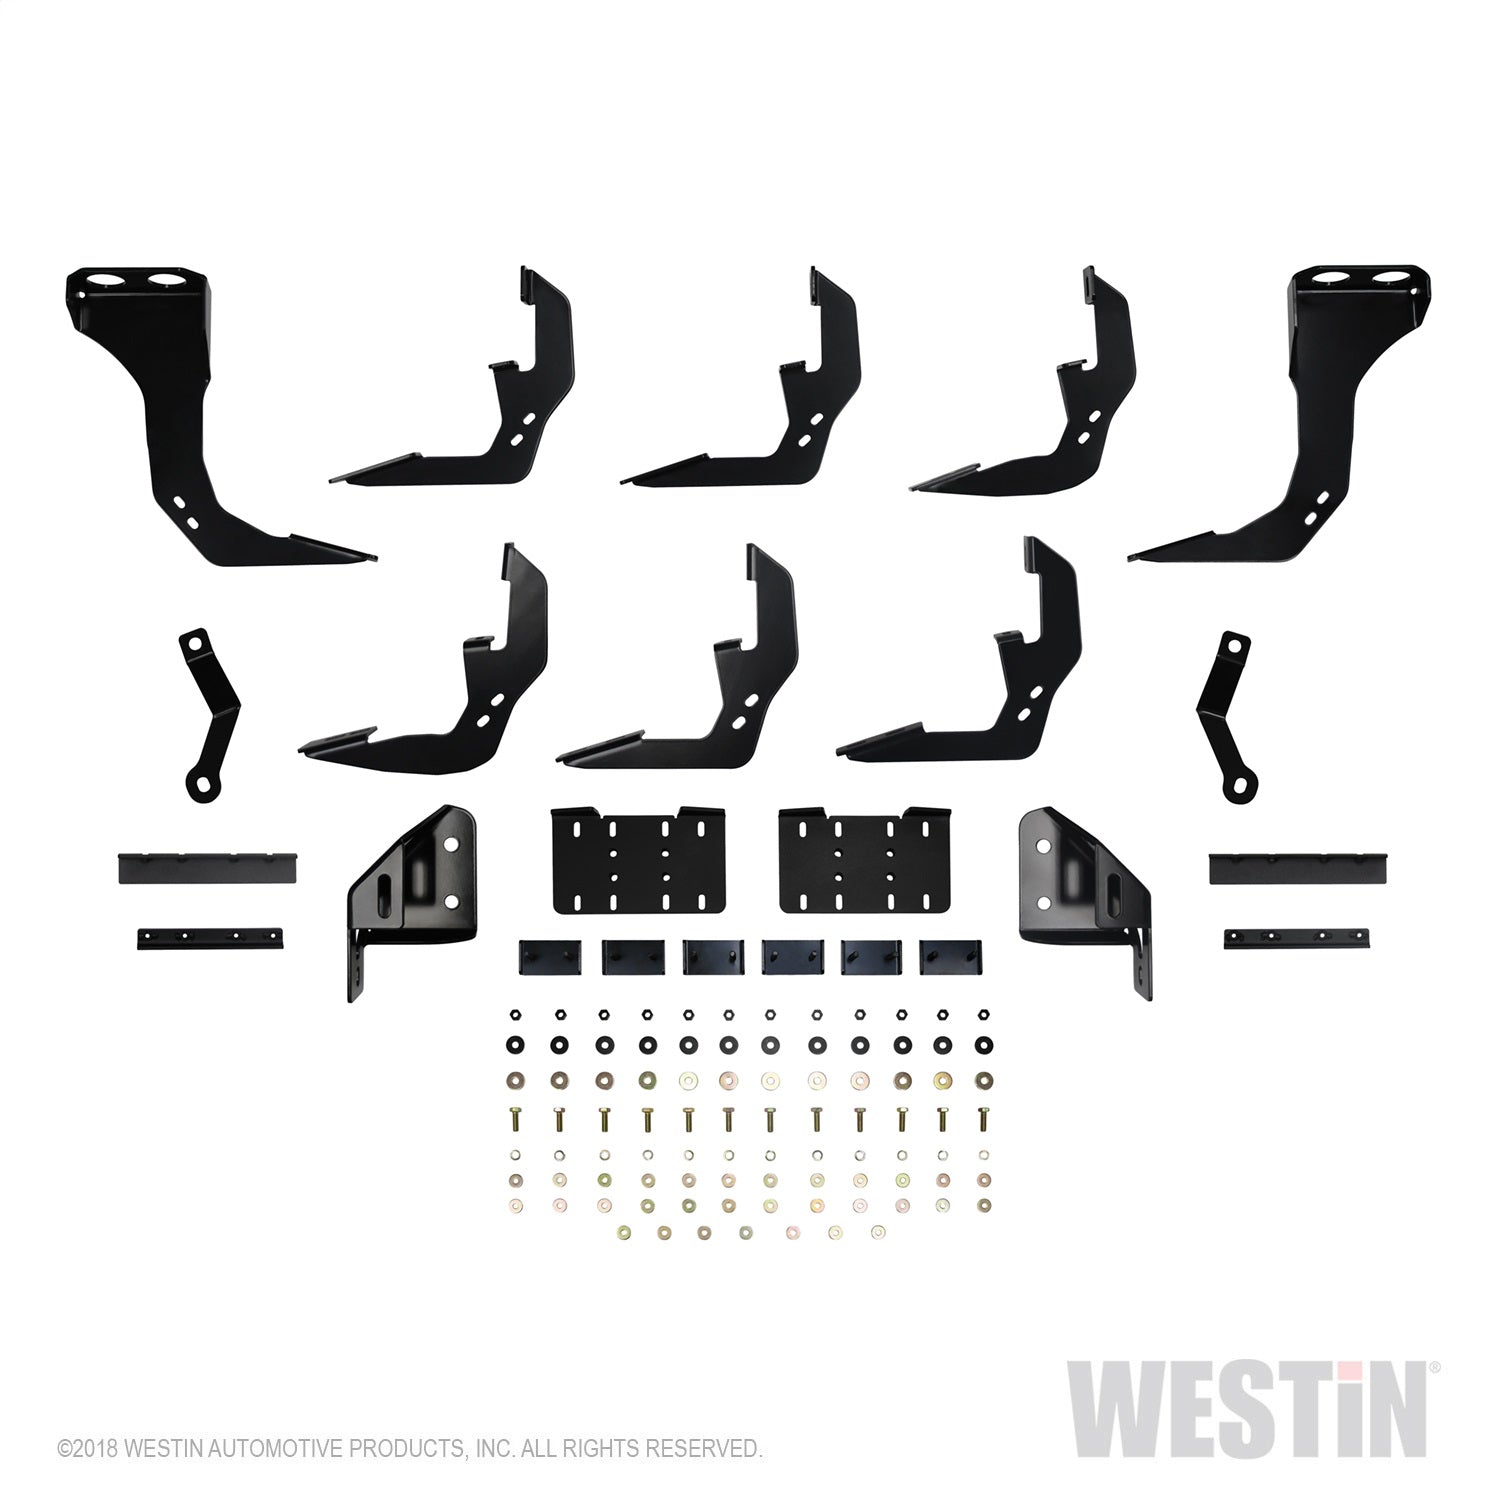 Westin 28-534680 R5 Modular Wheel to Wheel Nerf Step Bars